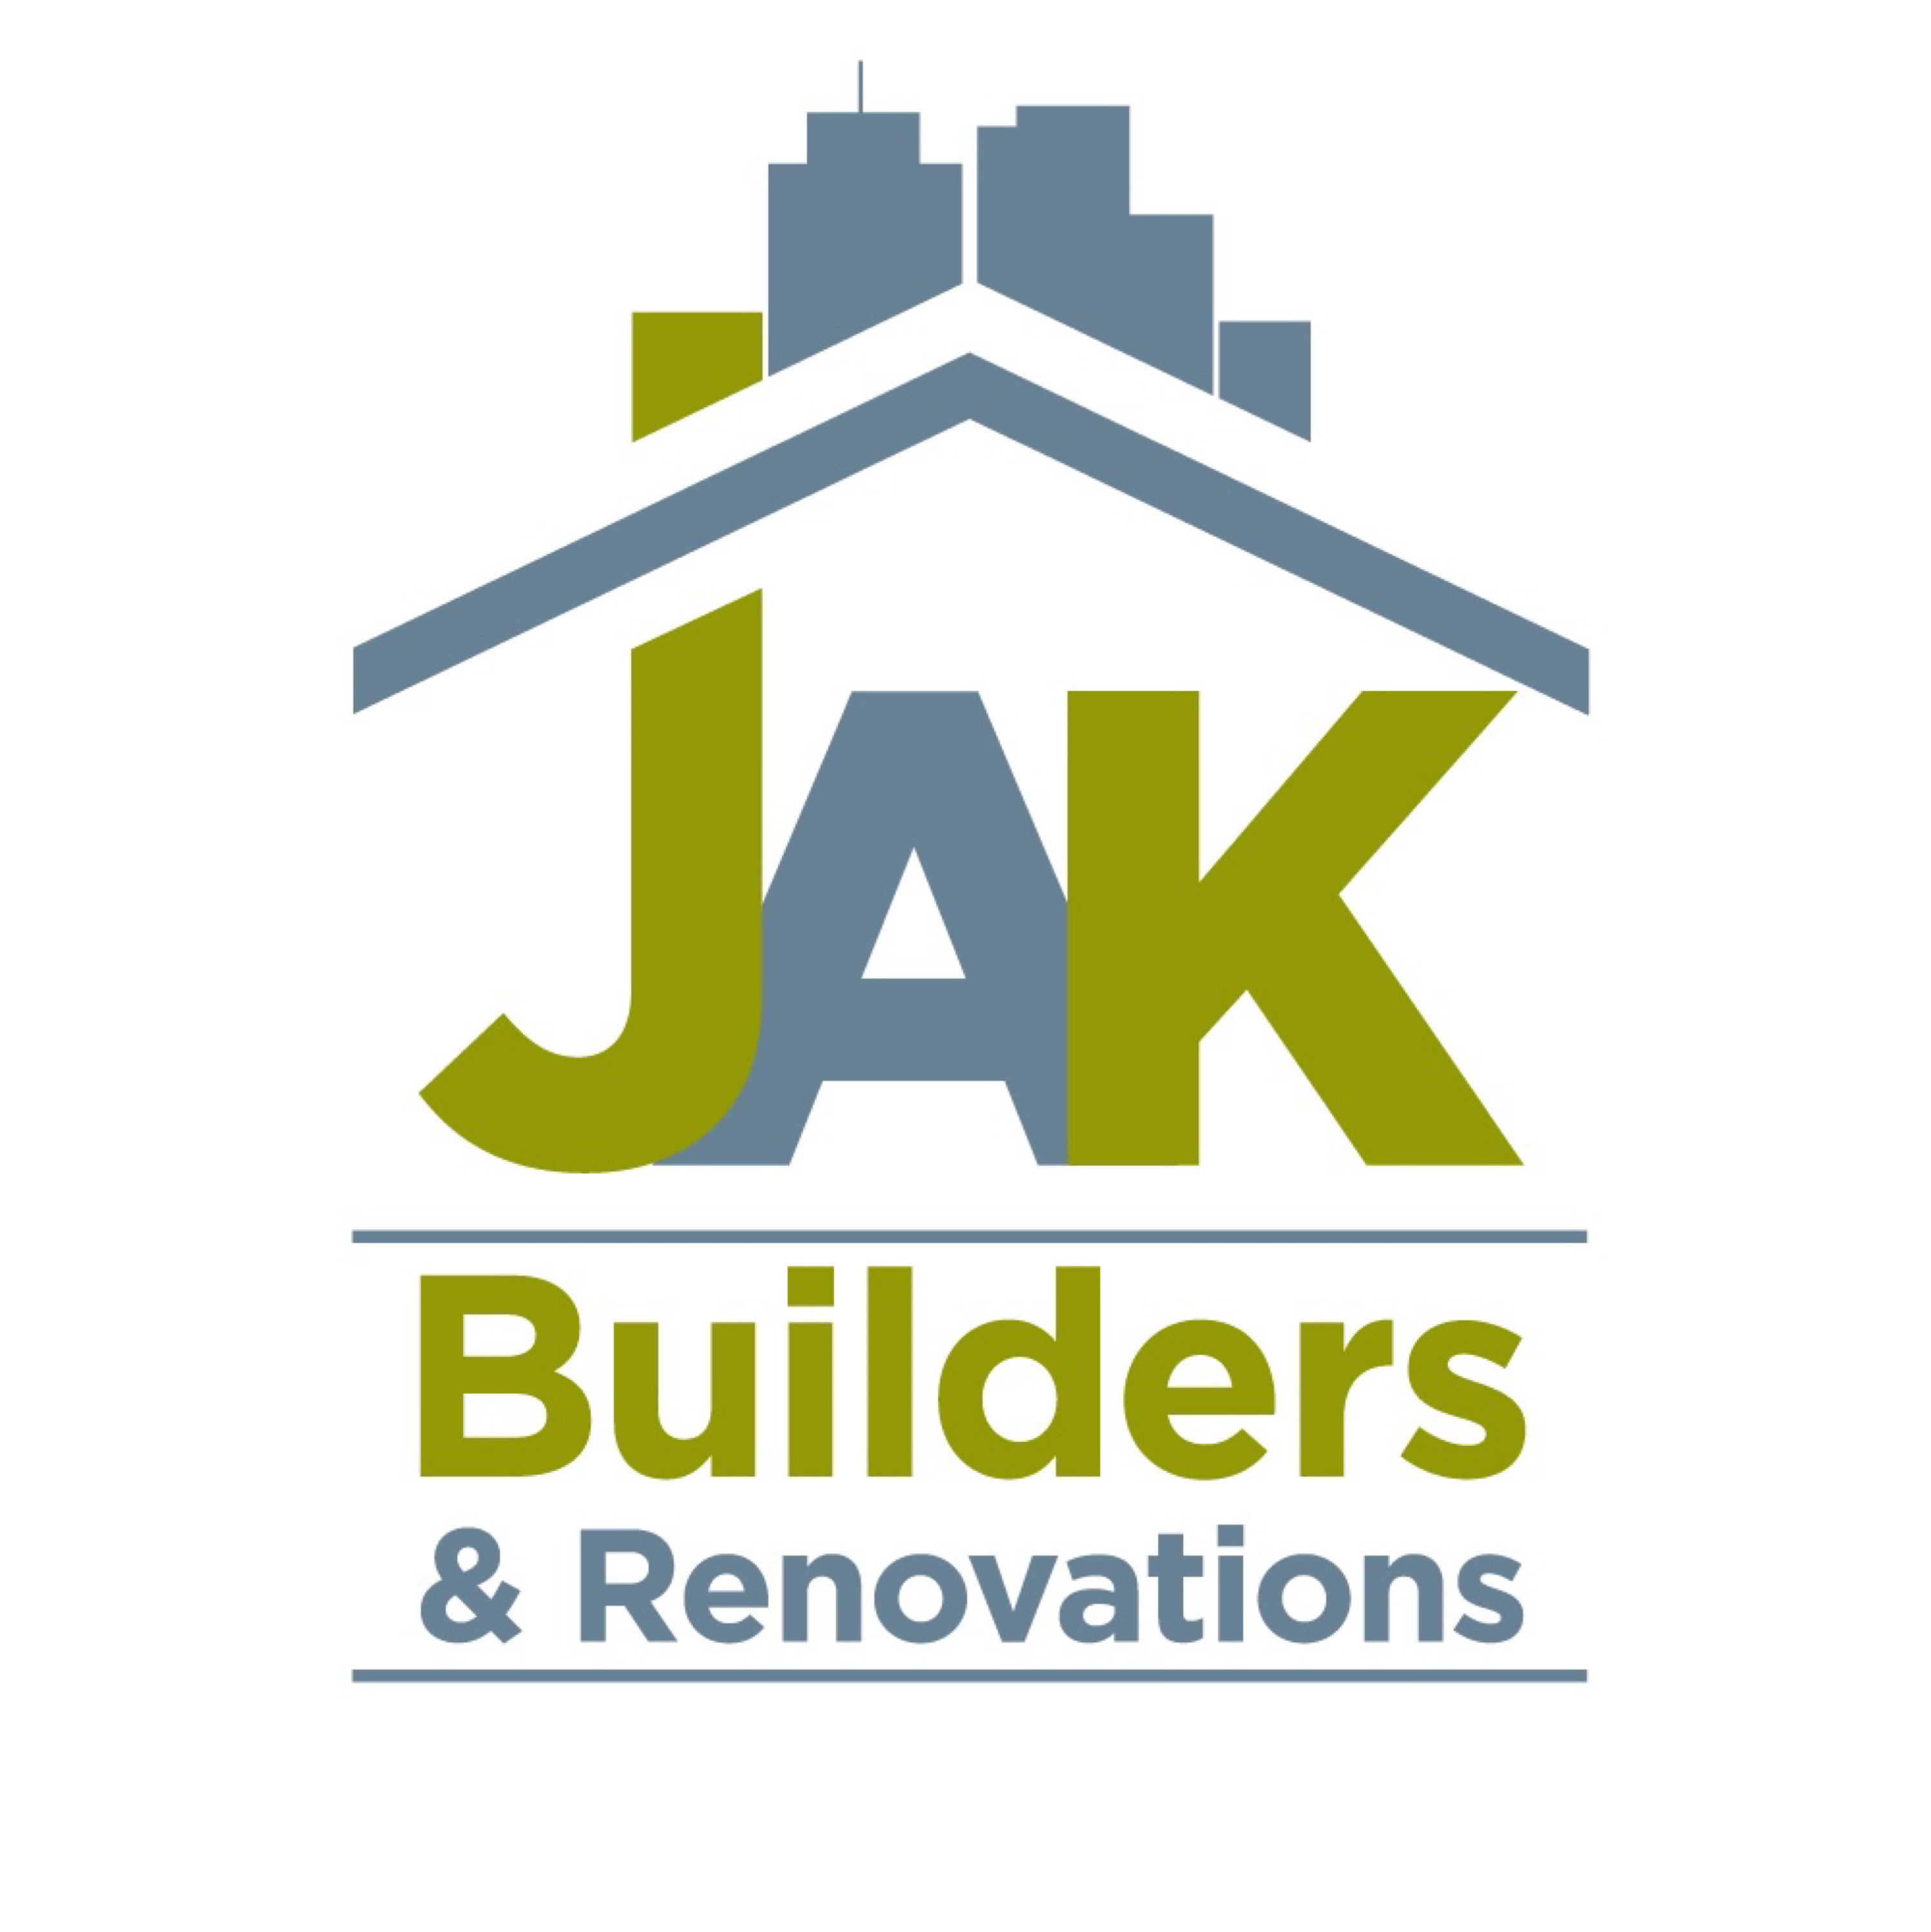 J A K Builders & Renovations, LLC Logo